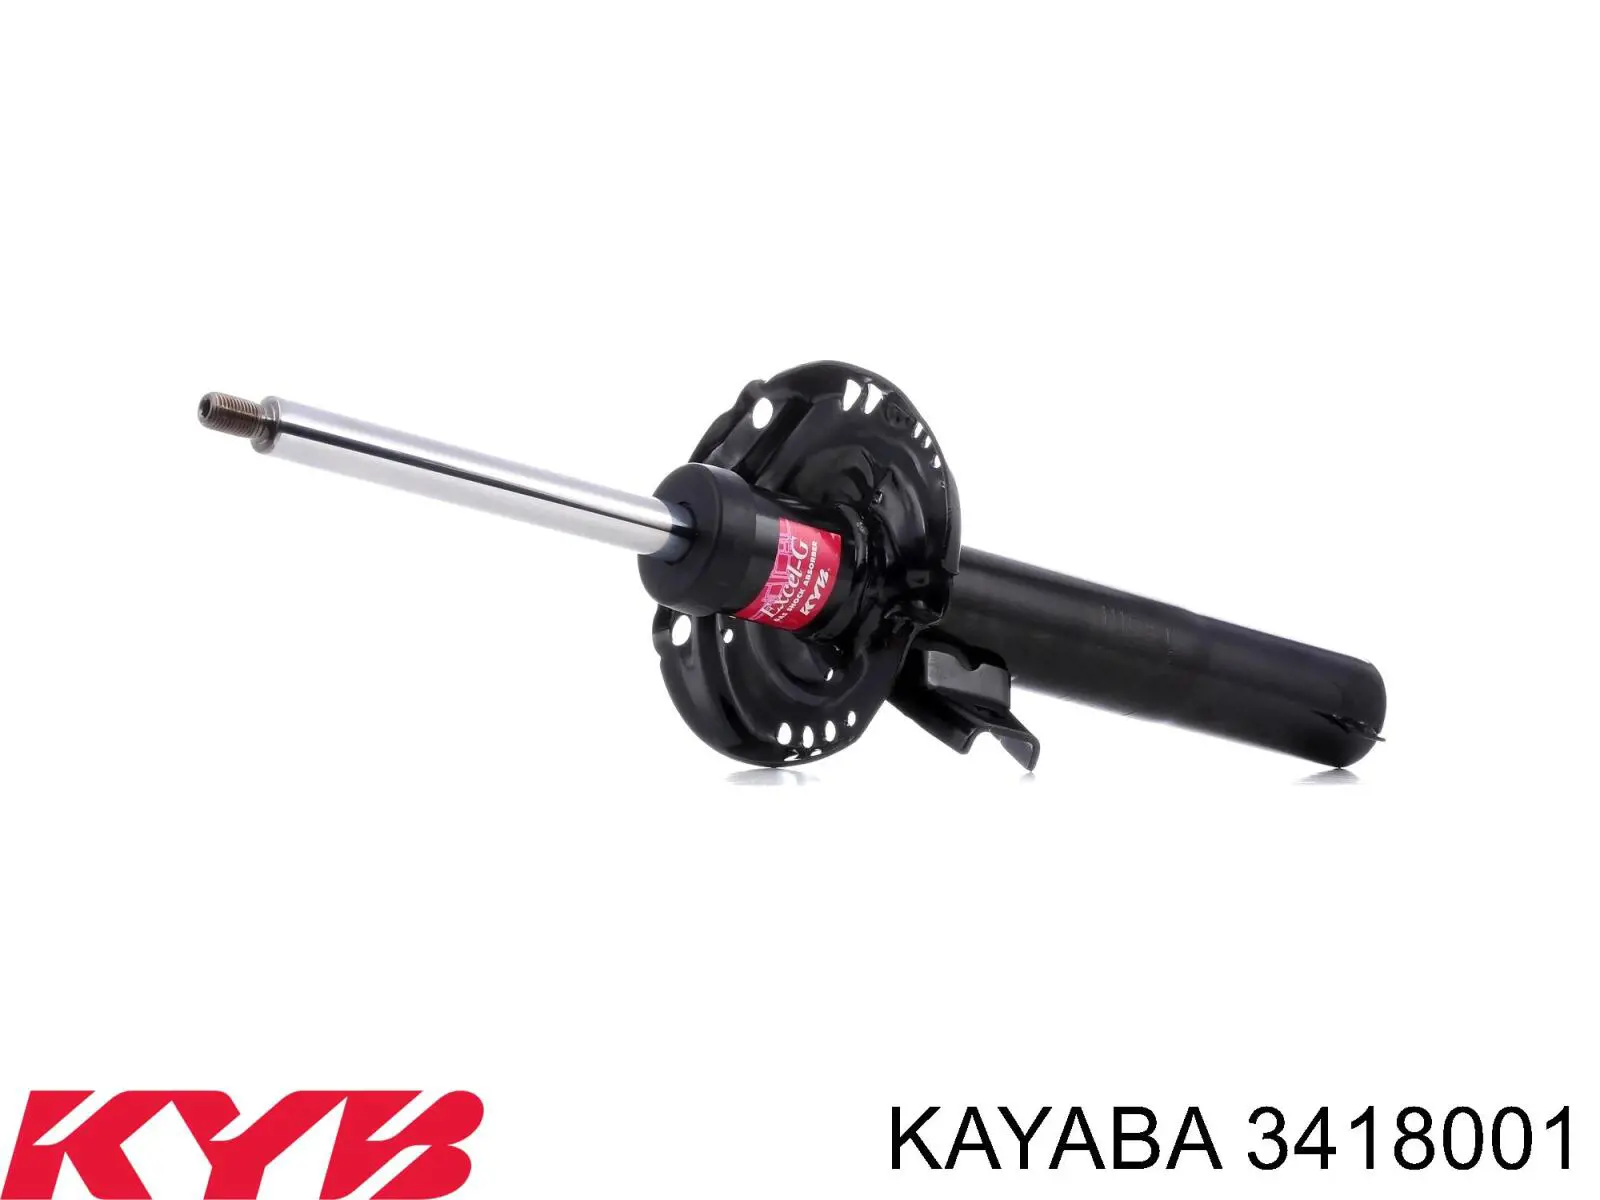 3418001 Kayaba amortiguador delantero